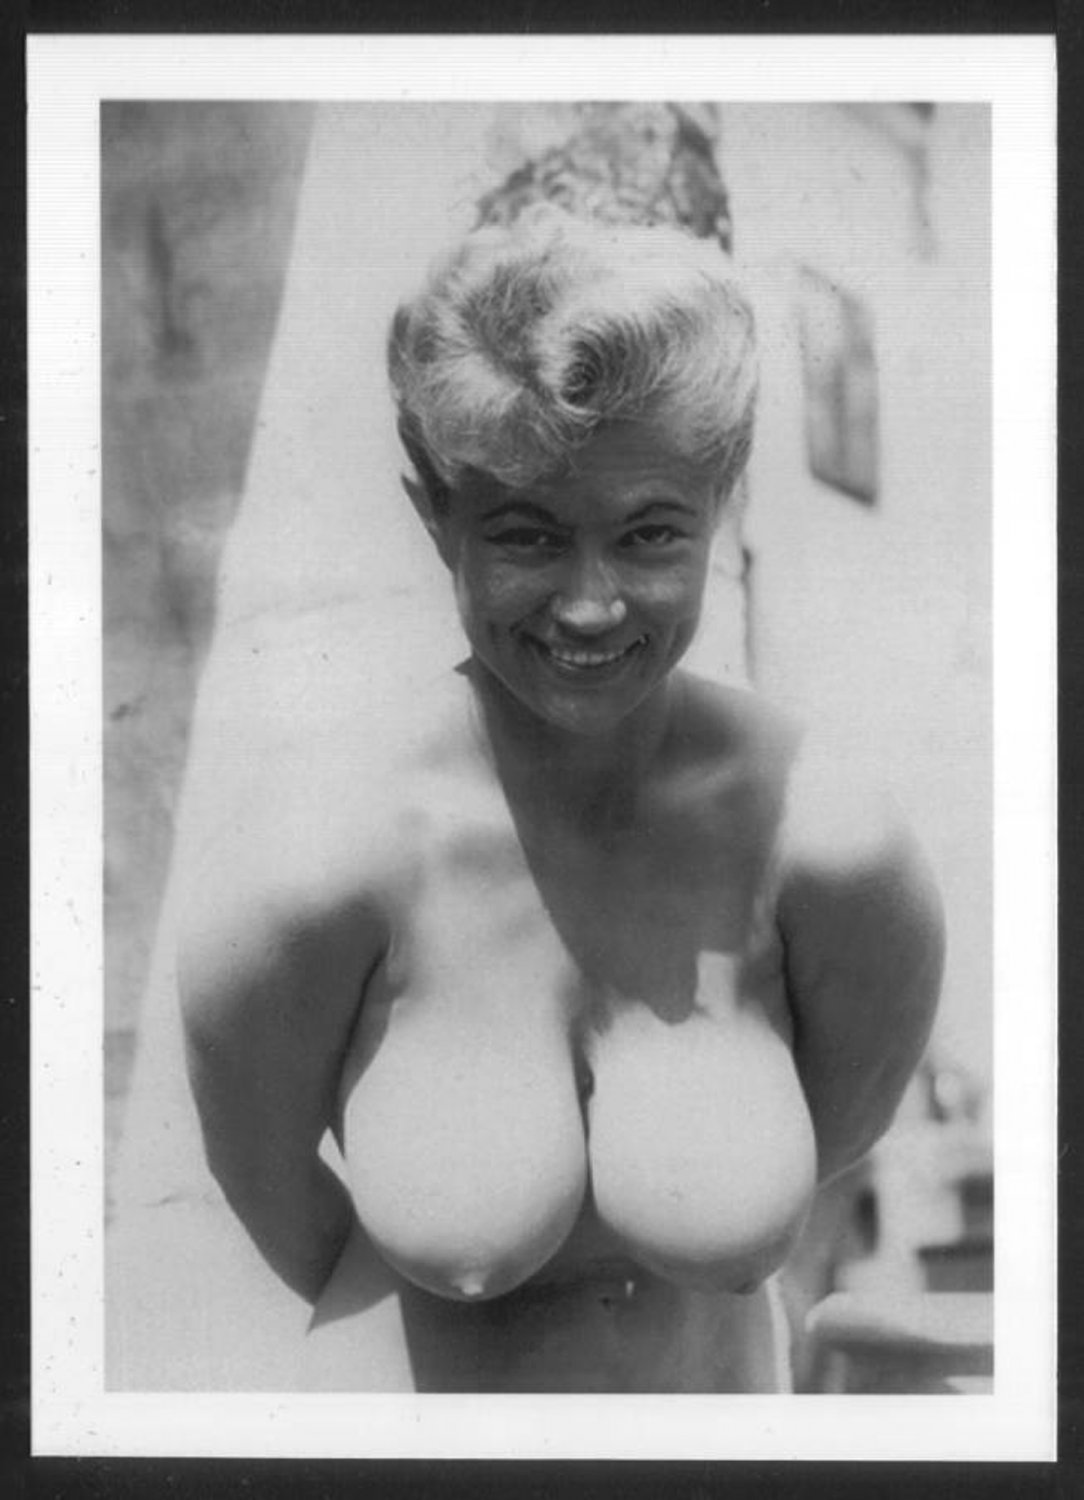 Virginia bell topless nude huge breasts new reprint 5 X 7 #124.